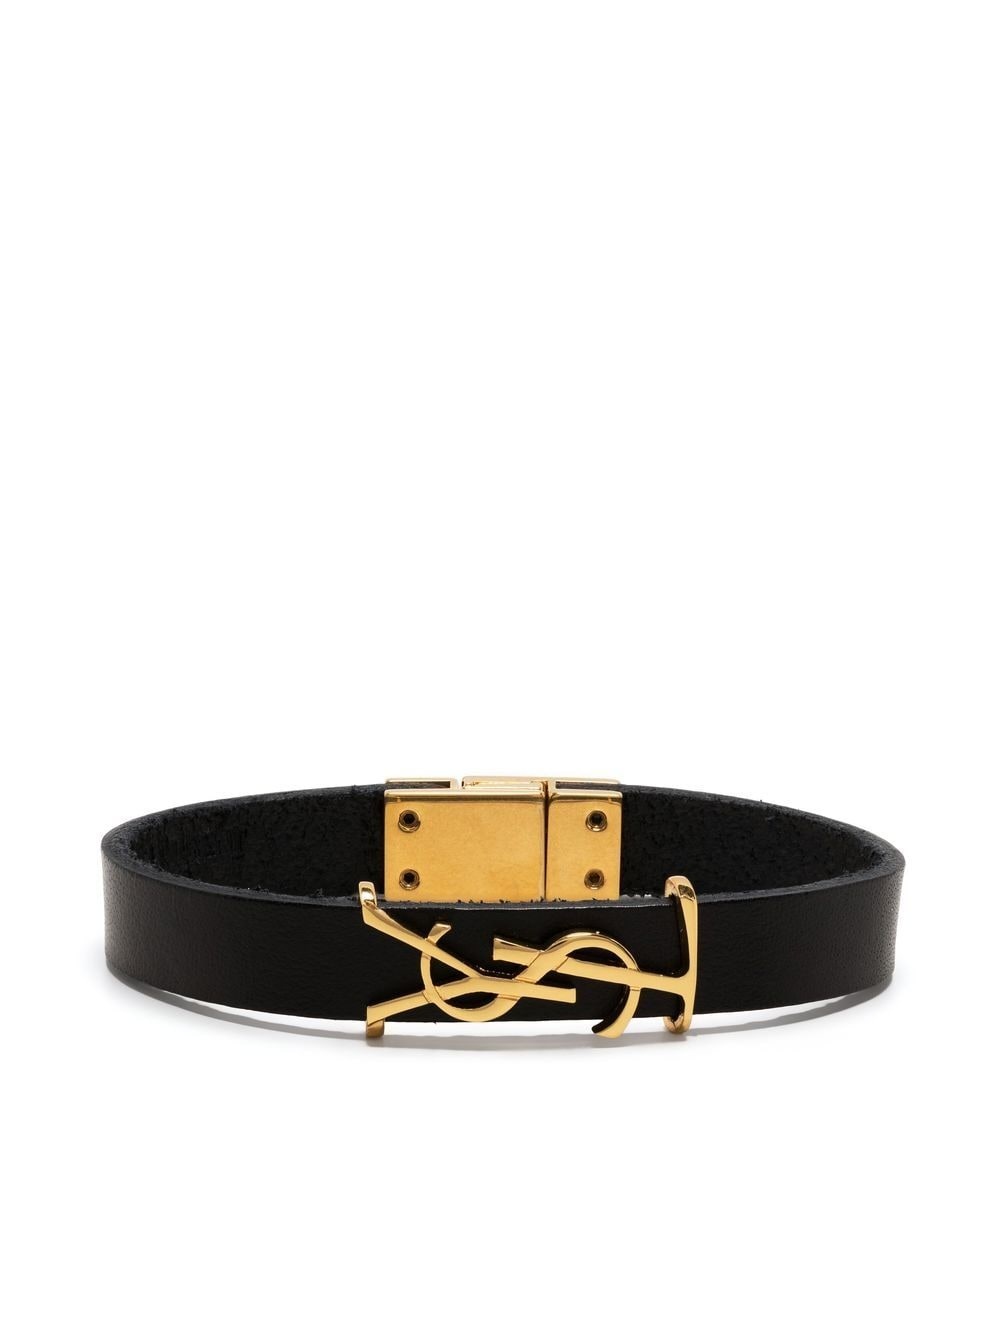 YSL charm leather bracelet - 1